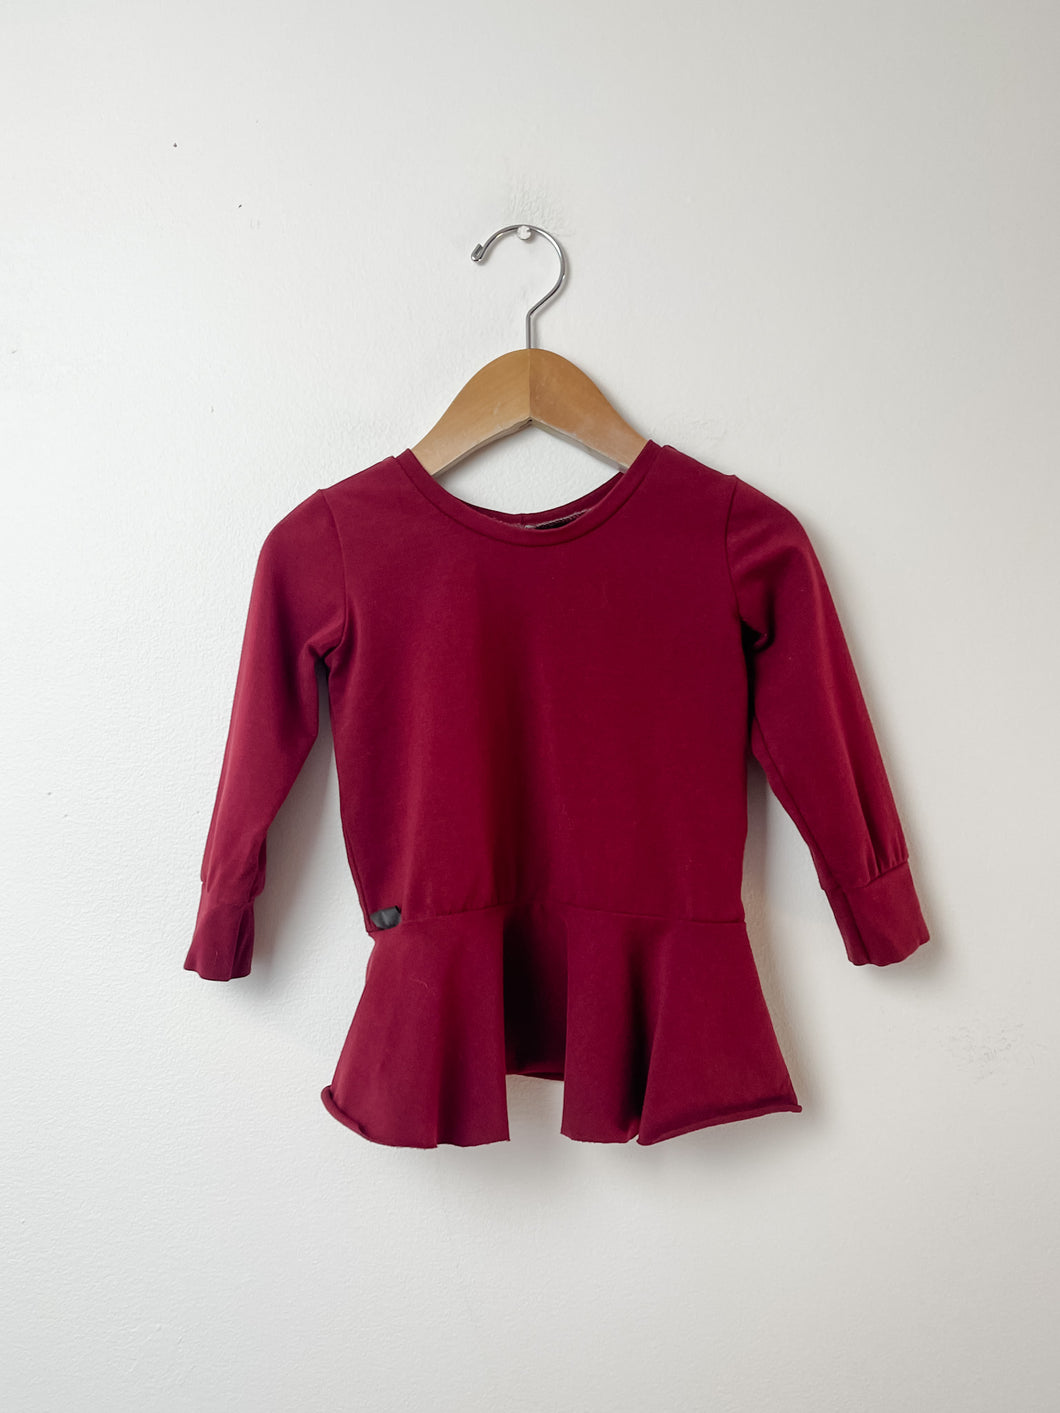 Burgundy Created by Fern Shirt Size 12-18 Months